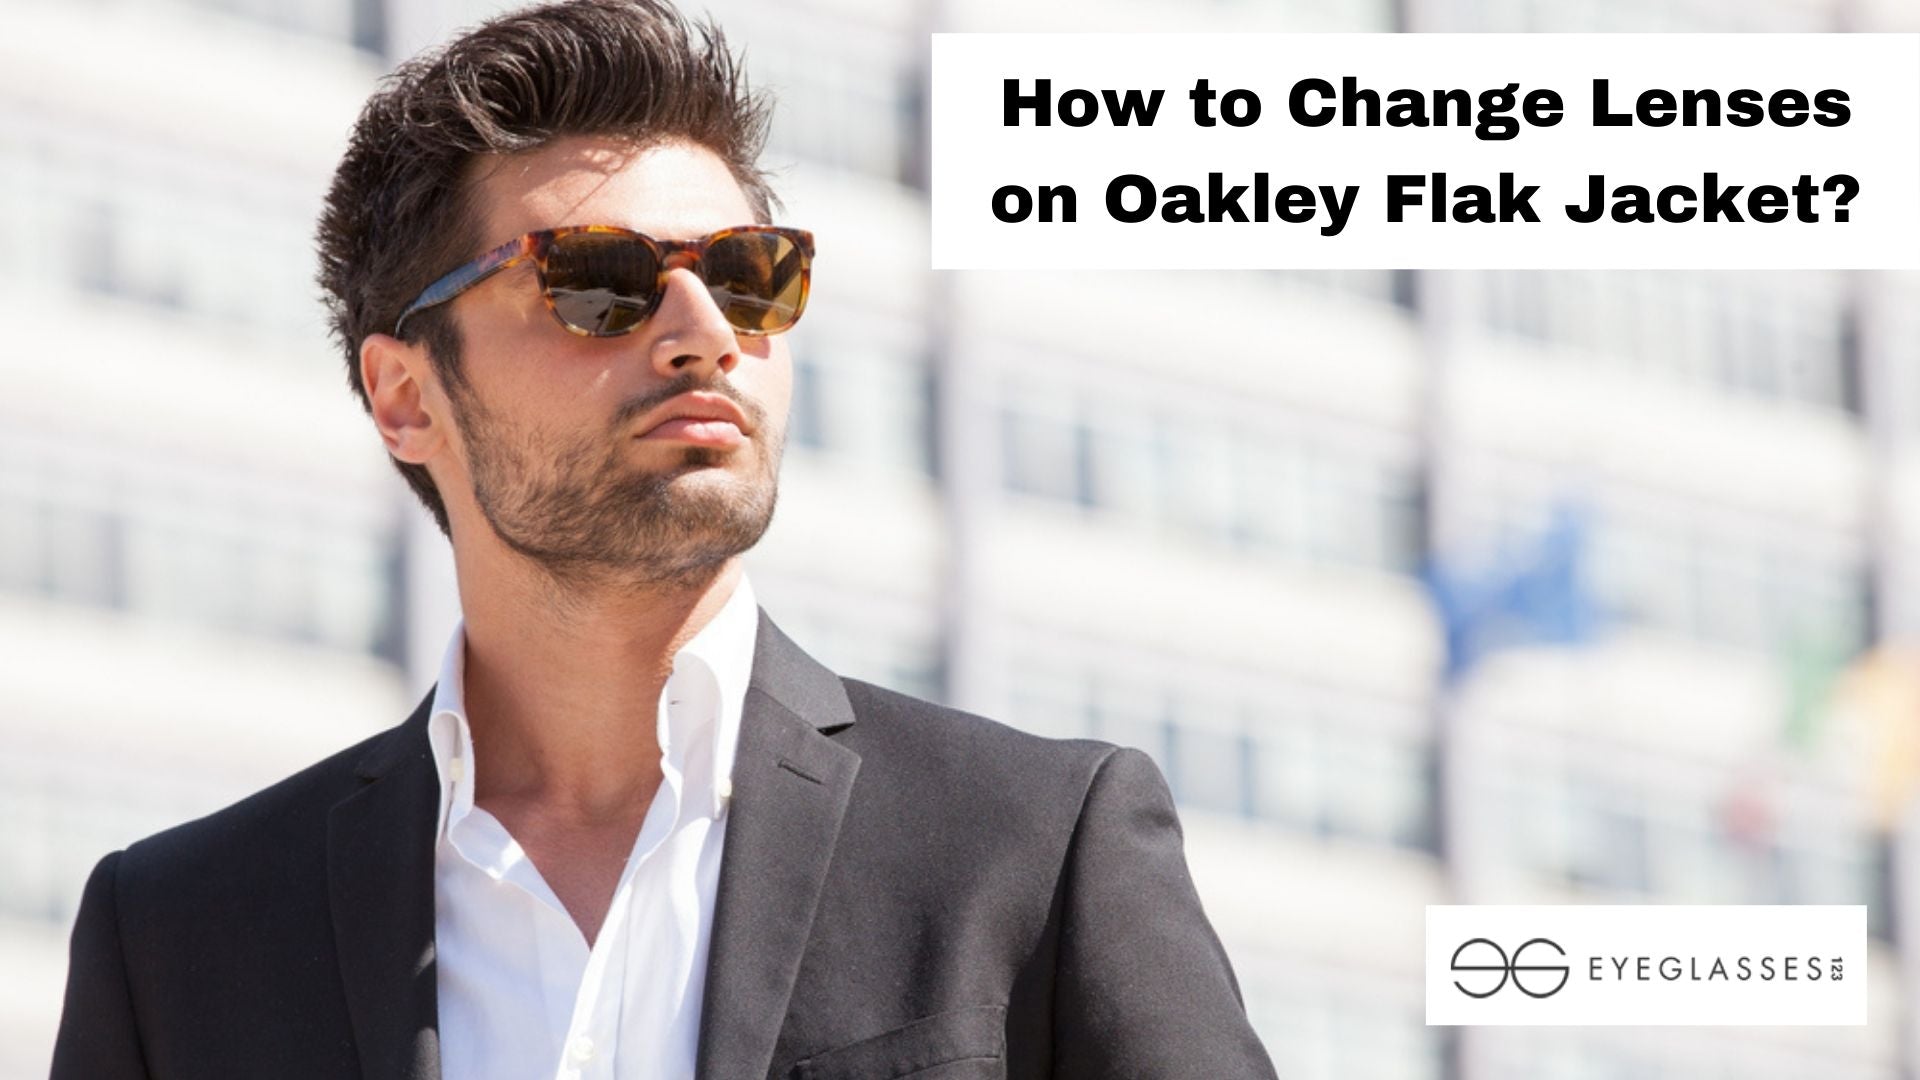 How to Change Lenses on Oakley Flak Jacket?